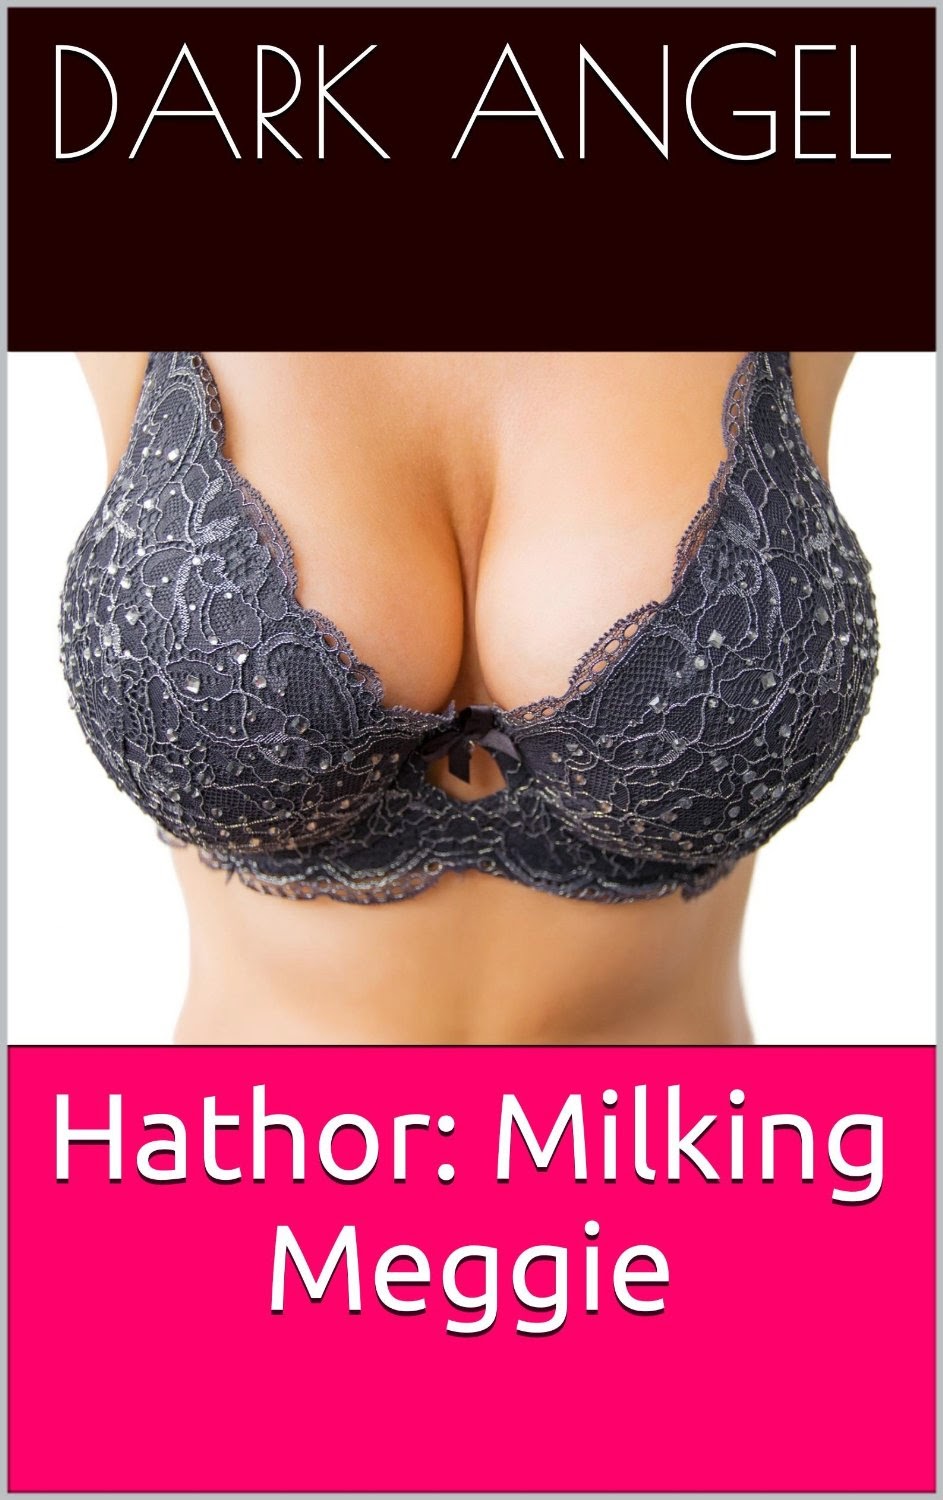 http://www.amazon.com/Hathor-Milking-Meggie-Planets-Apart-ebook/dp/B00V3KT8JK/ref=sr_1_1?ie=UTF8&qid=1427198097&sr=8-1&keywords=hathor%3A+milking+meggie